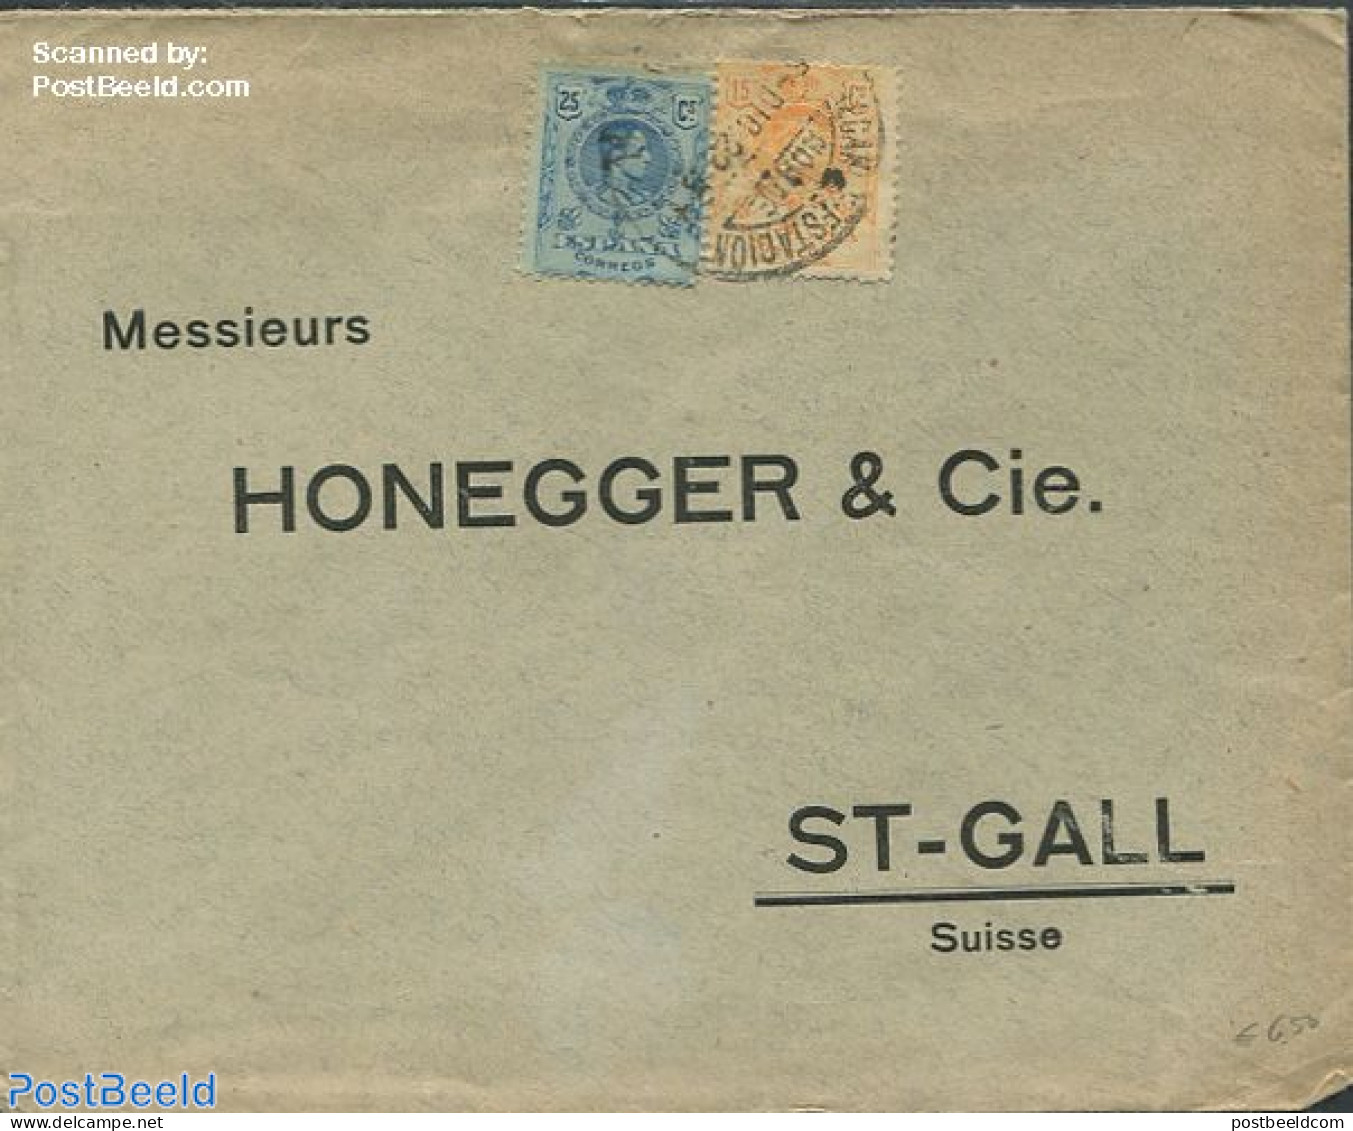 Spain 1923 Envelope To St.Gall, Postal History - Briefe U. Dokumente